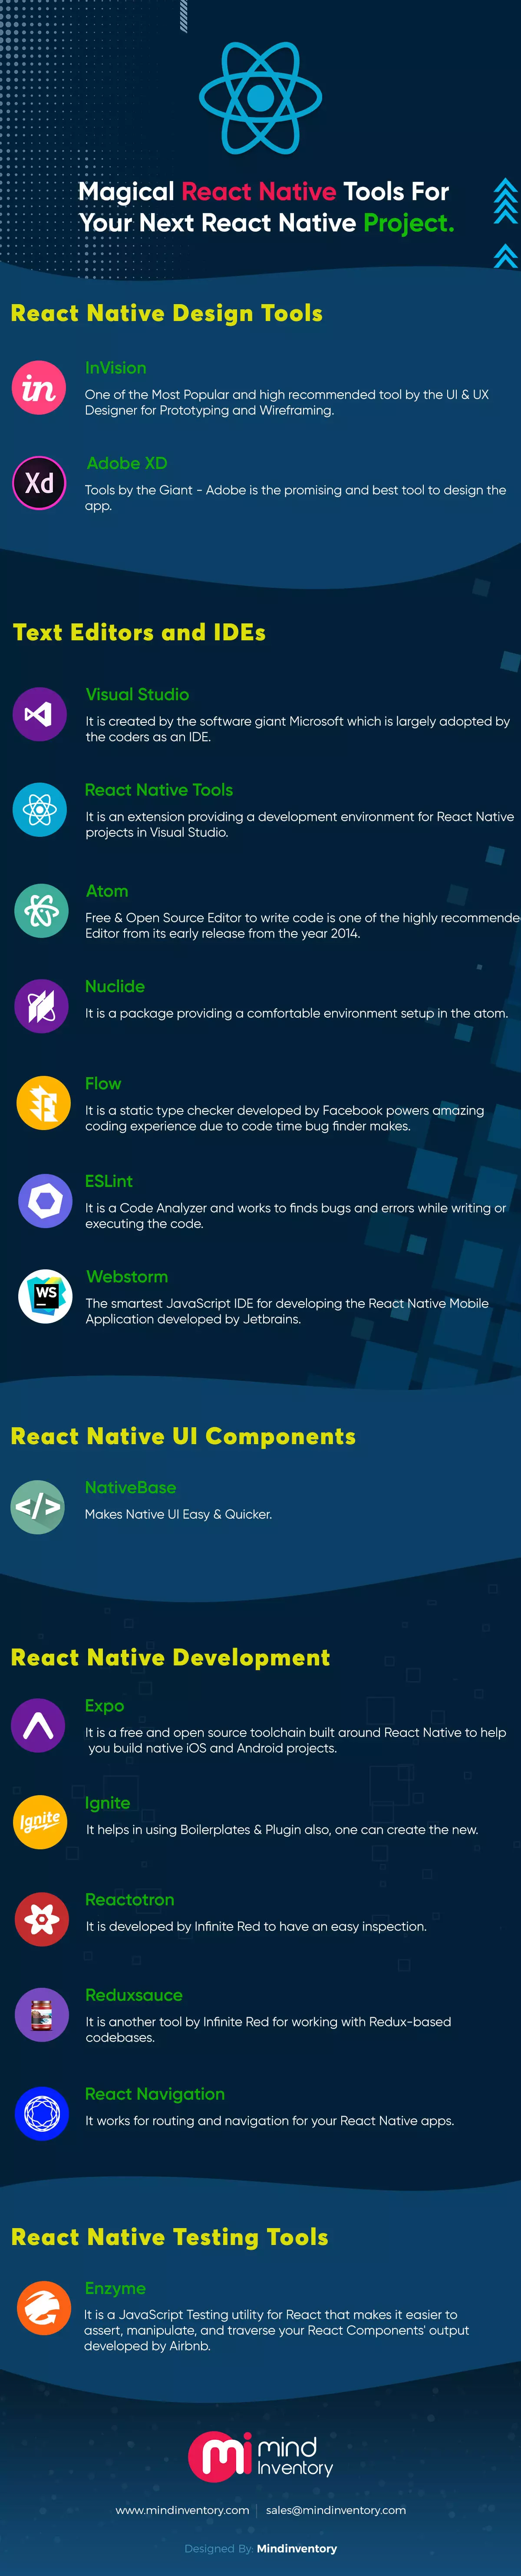 react native tools infographic